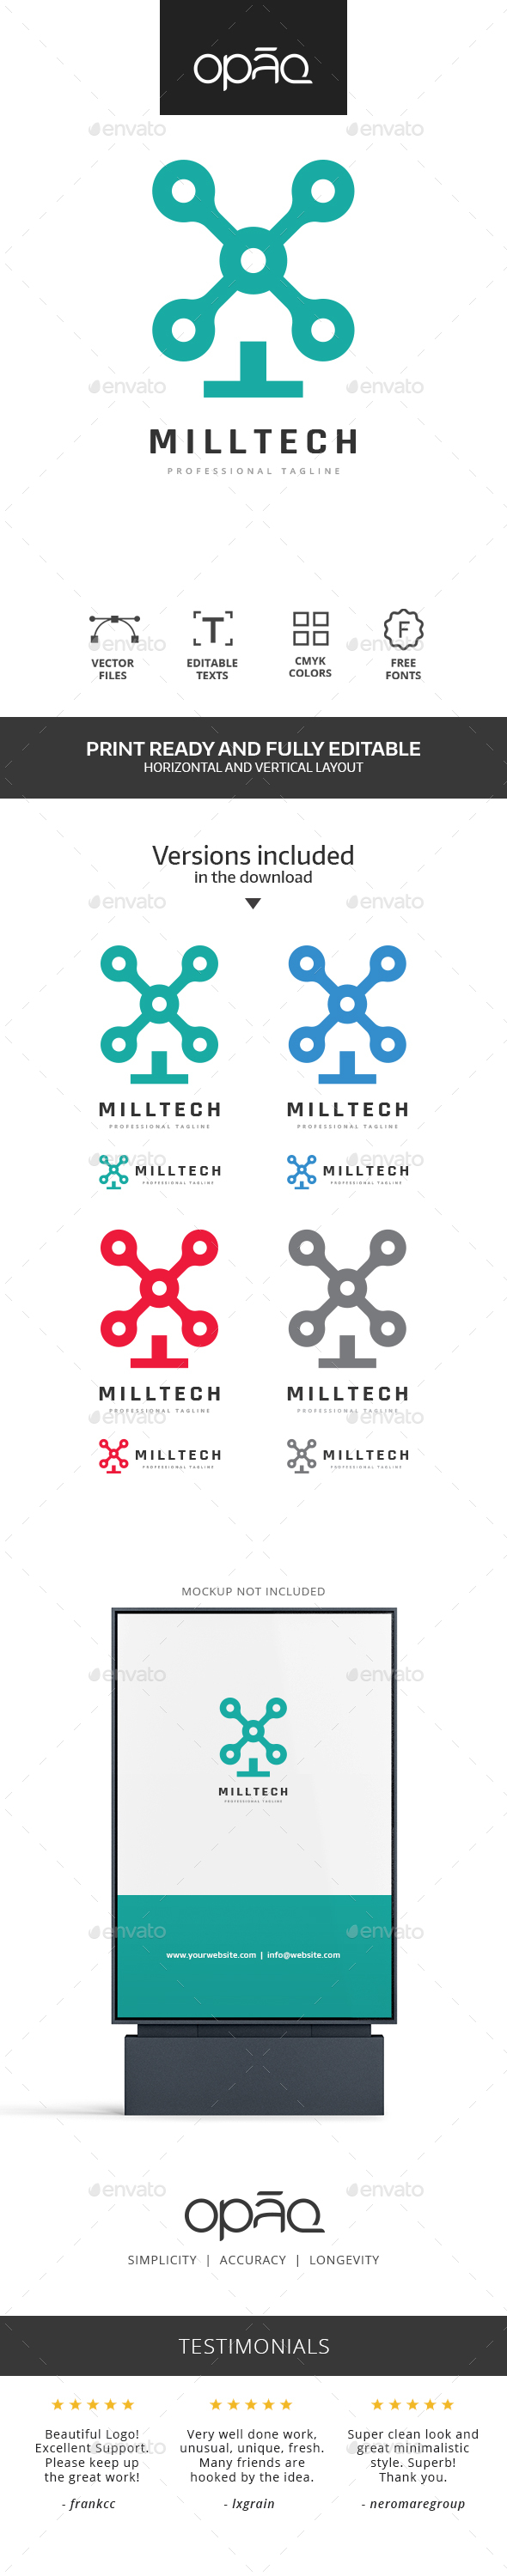 Mill Technologies Logo